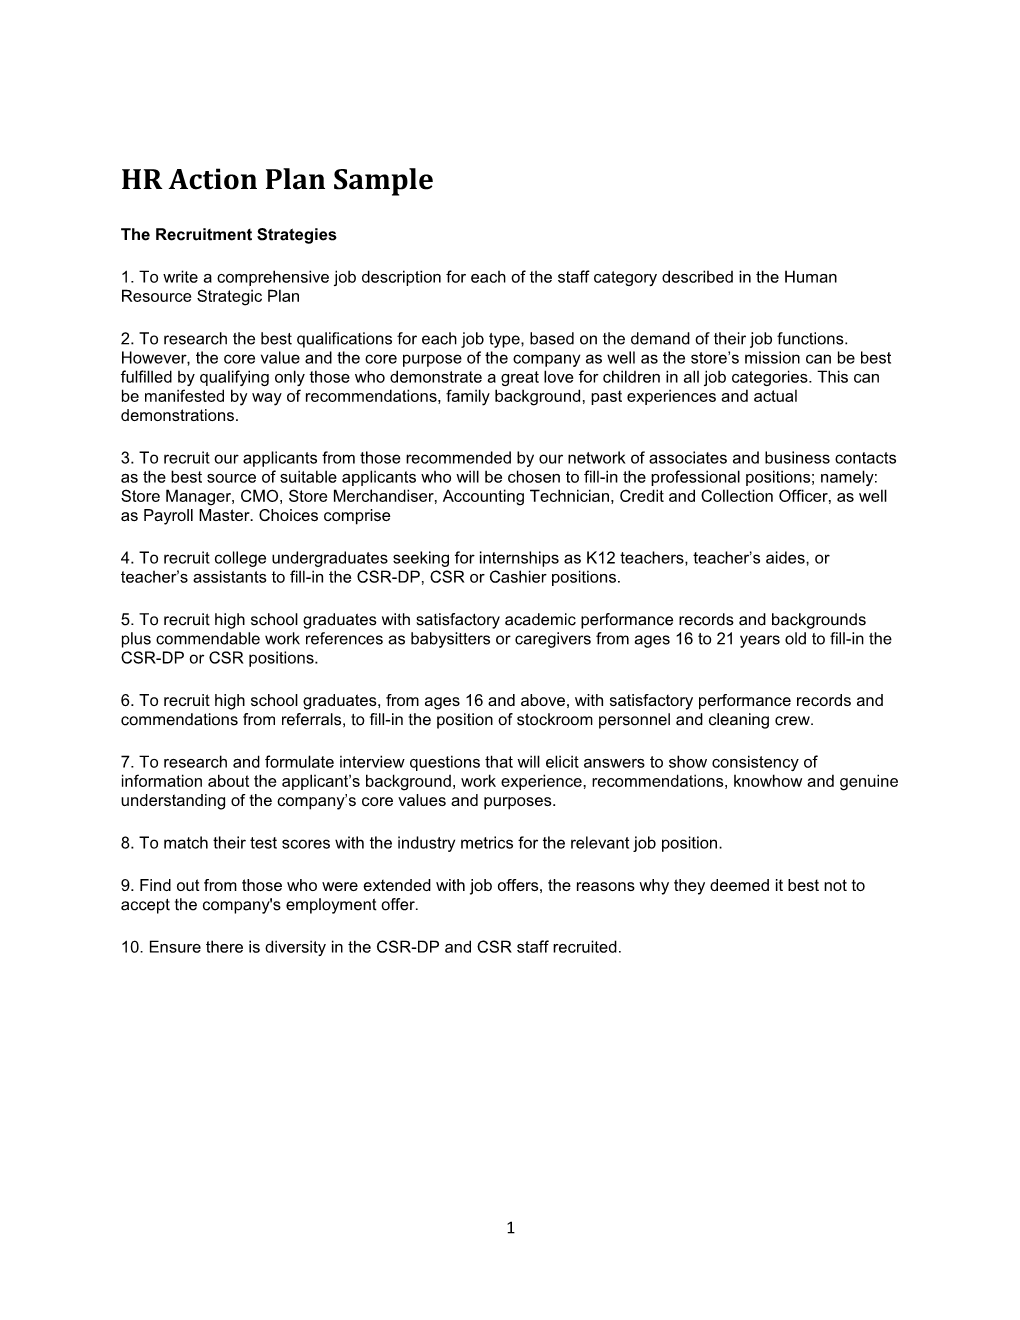 HR Action Plan Sample